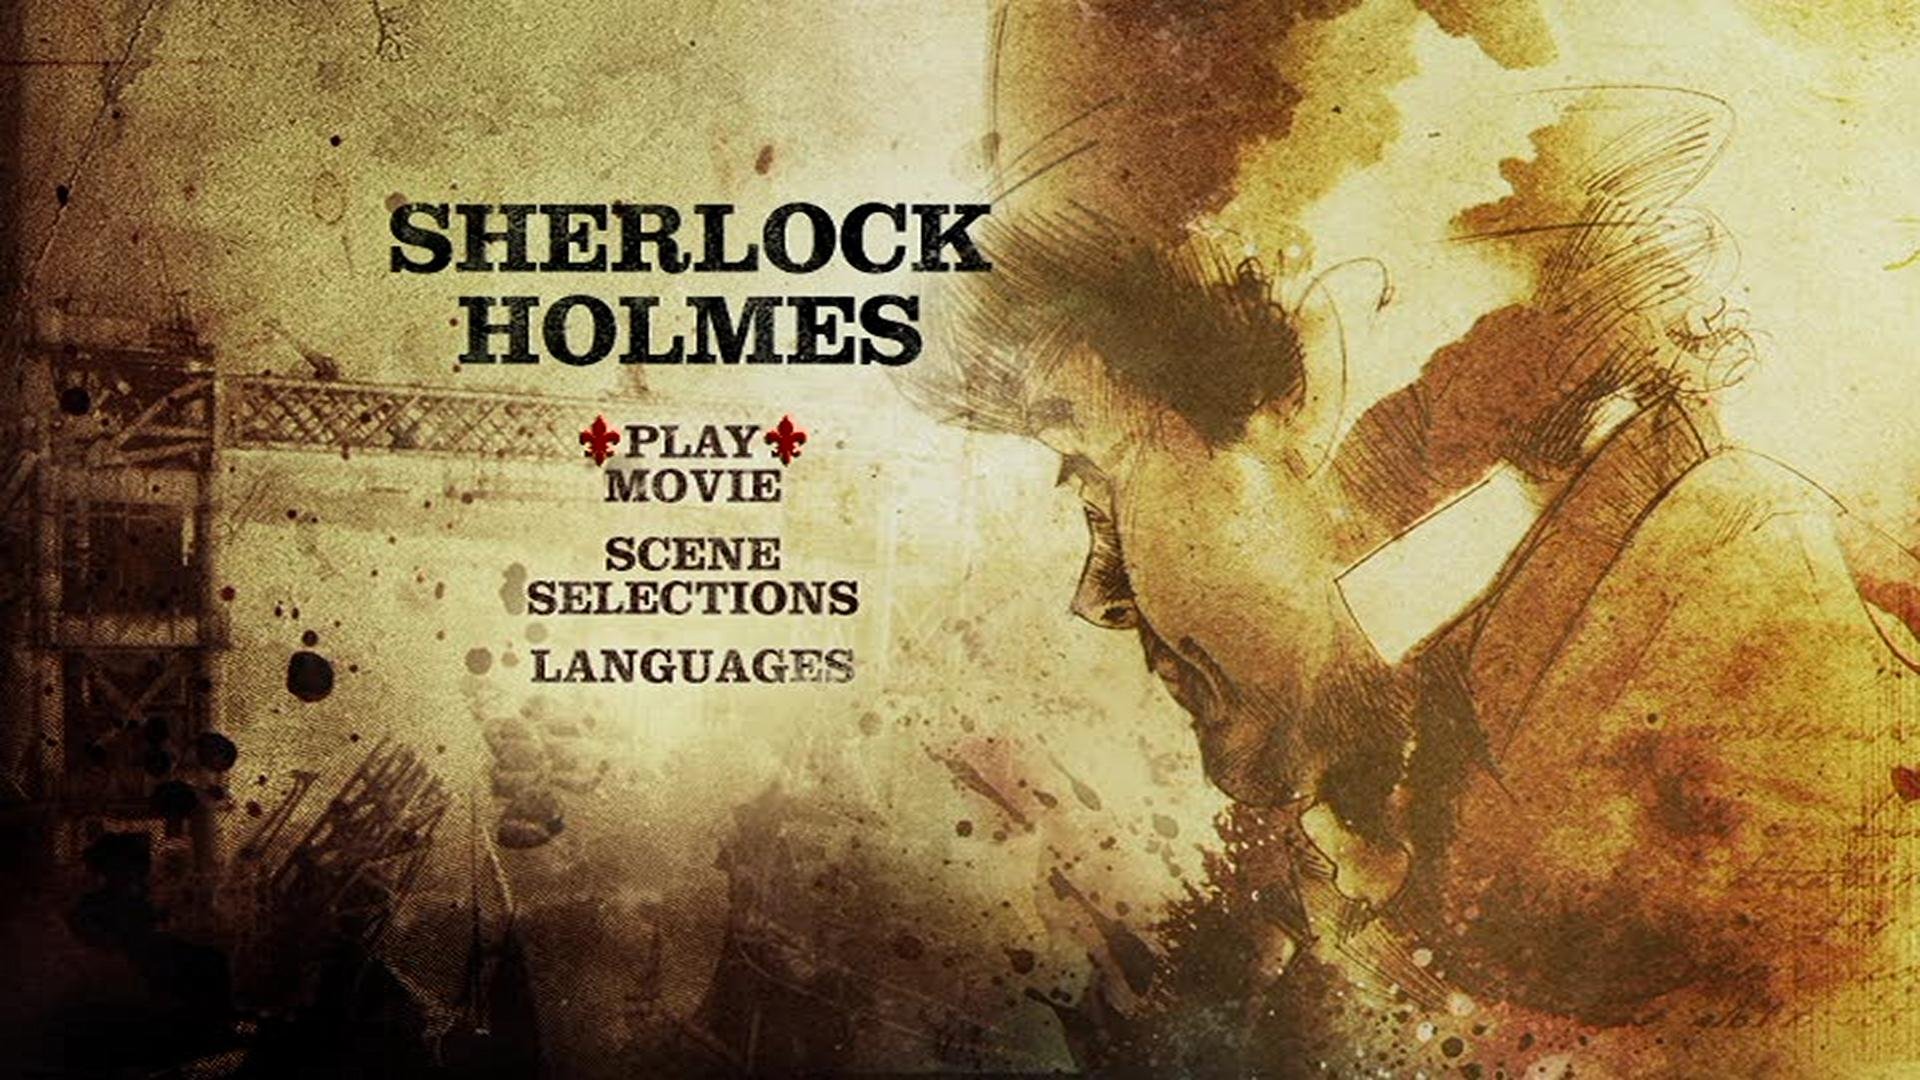 Шерлок Холмс шаблоны для презентаций